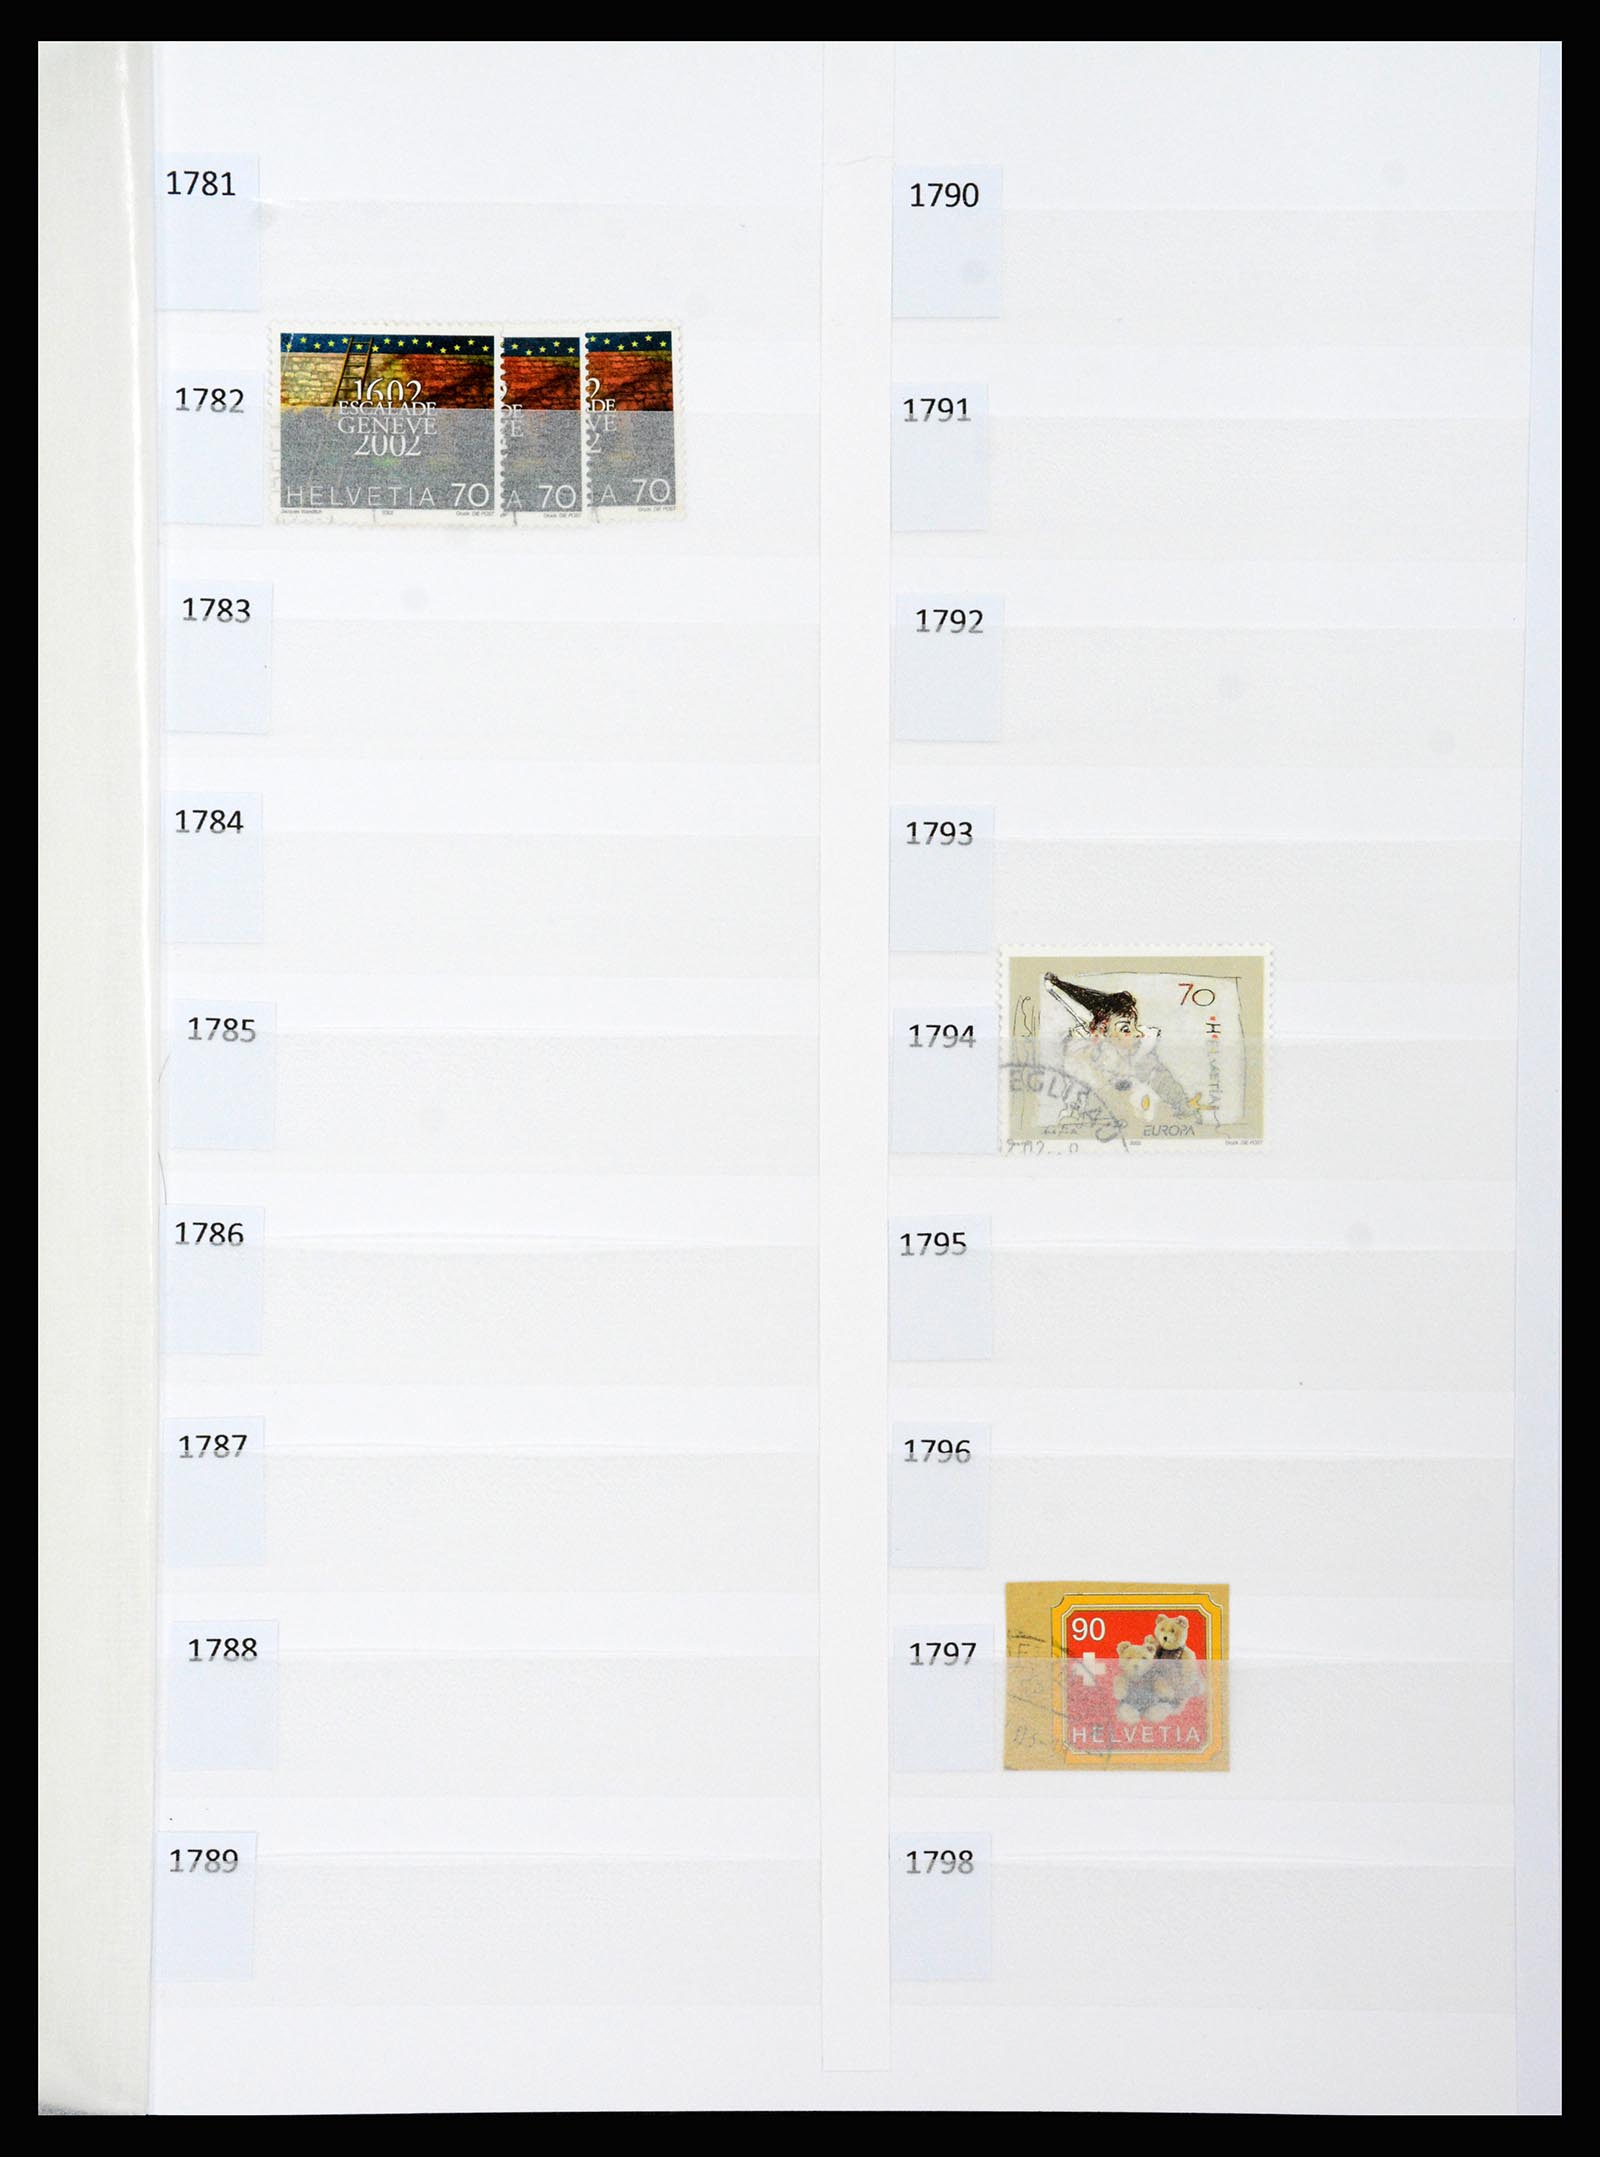 37252 100 - Stamp collection 37252 Switzerland 1900-2011.